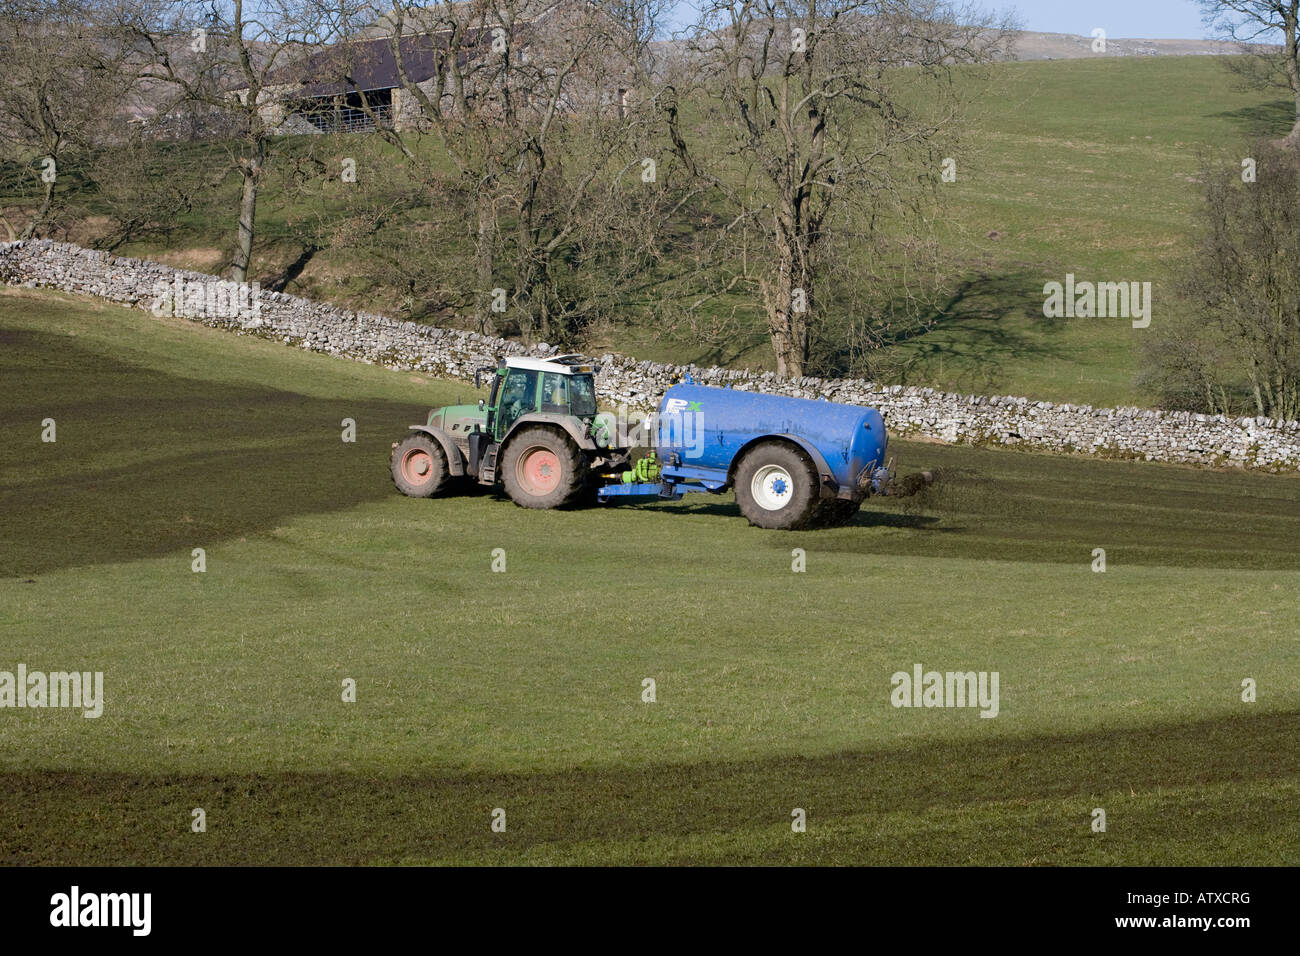 Farmer working driving green tractor & cylindrical fertilizer tank spraying discharging slurry on farmland pasture field grass - Yorkshire, England UK Stock Photo